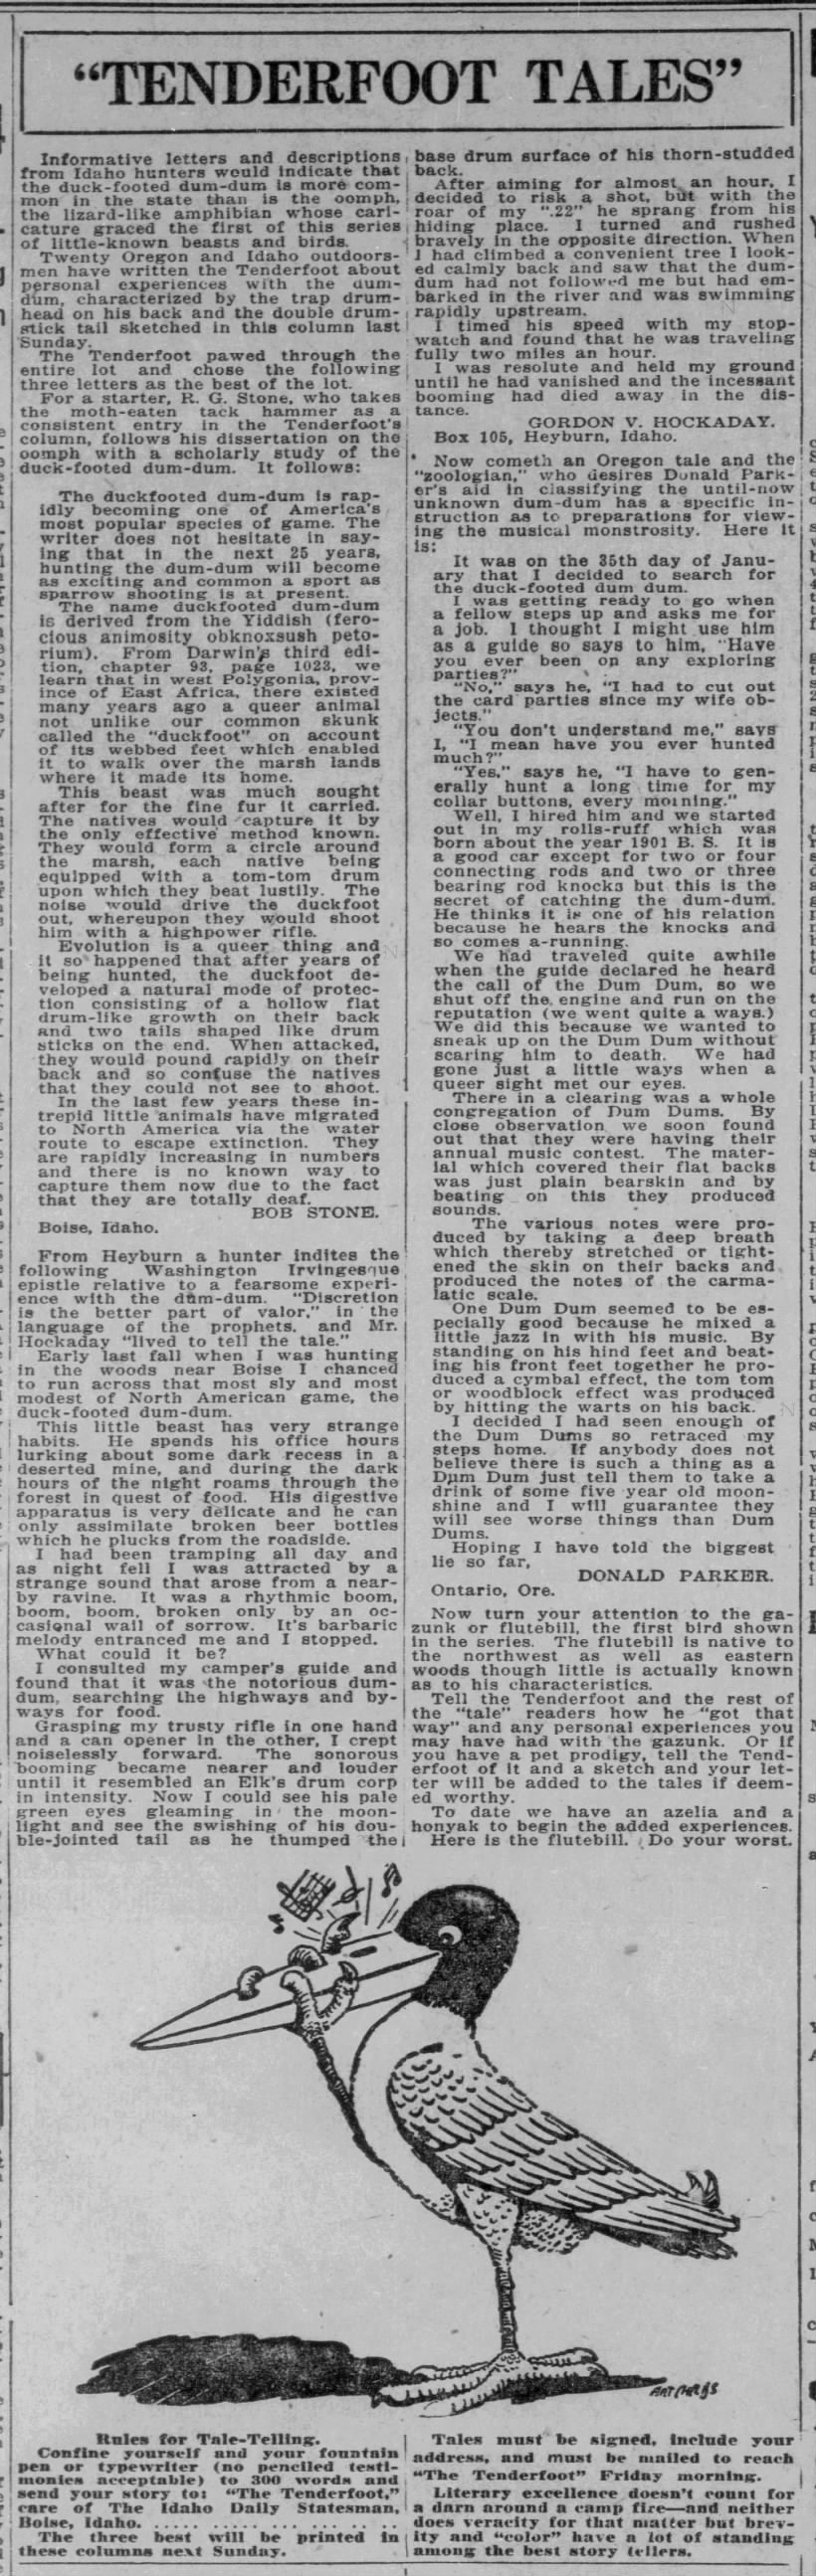 1922-11-26 “Tenderfoot tales”

The Idaho Sunday Statesman (Boise, ID), p. 8
